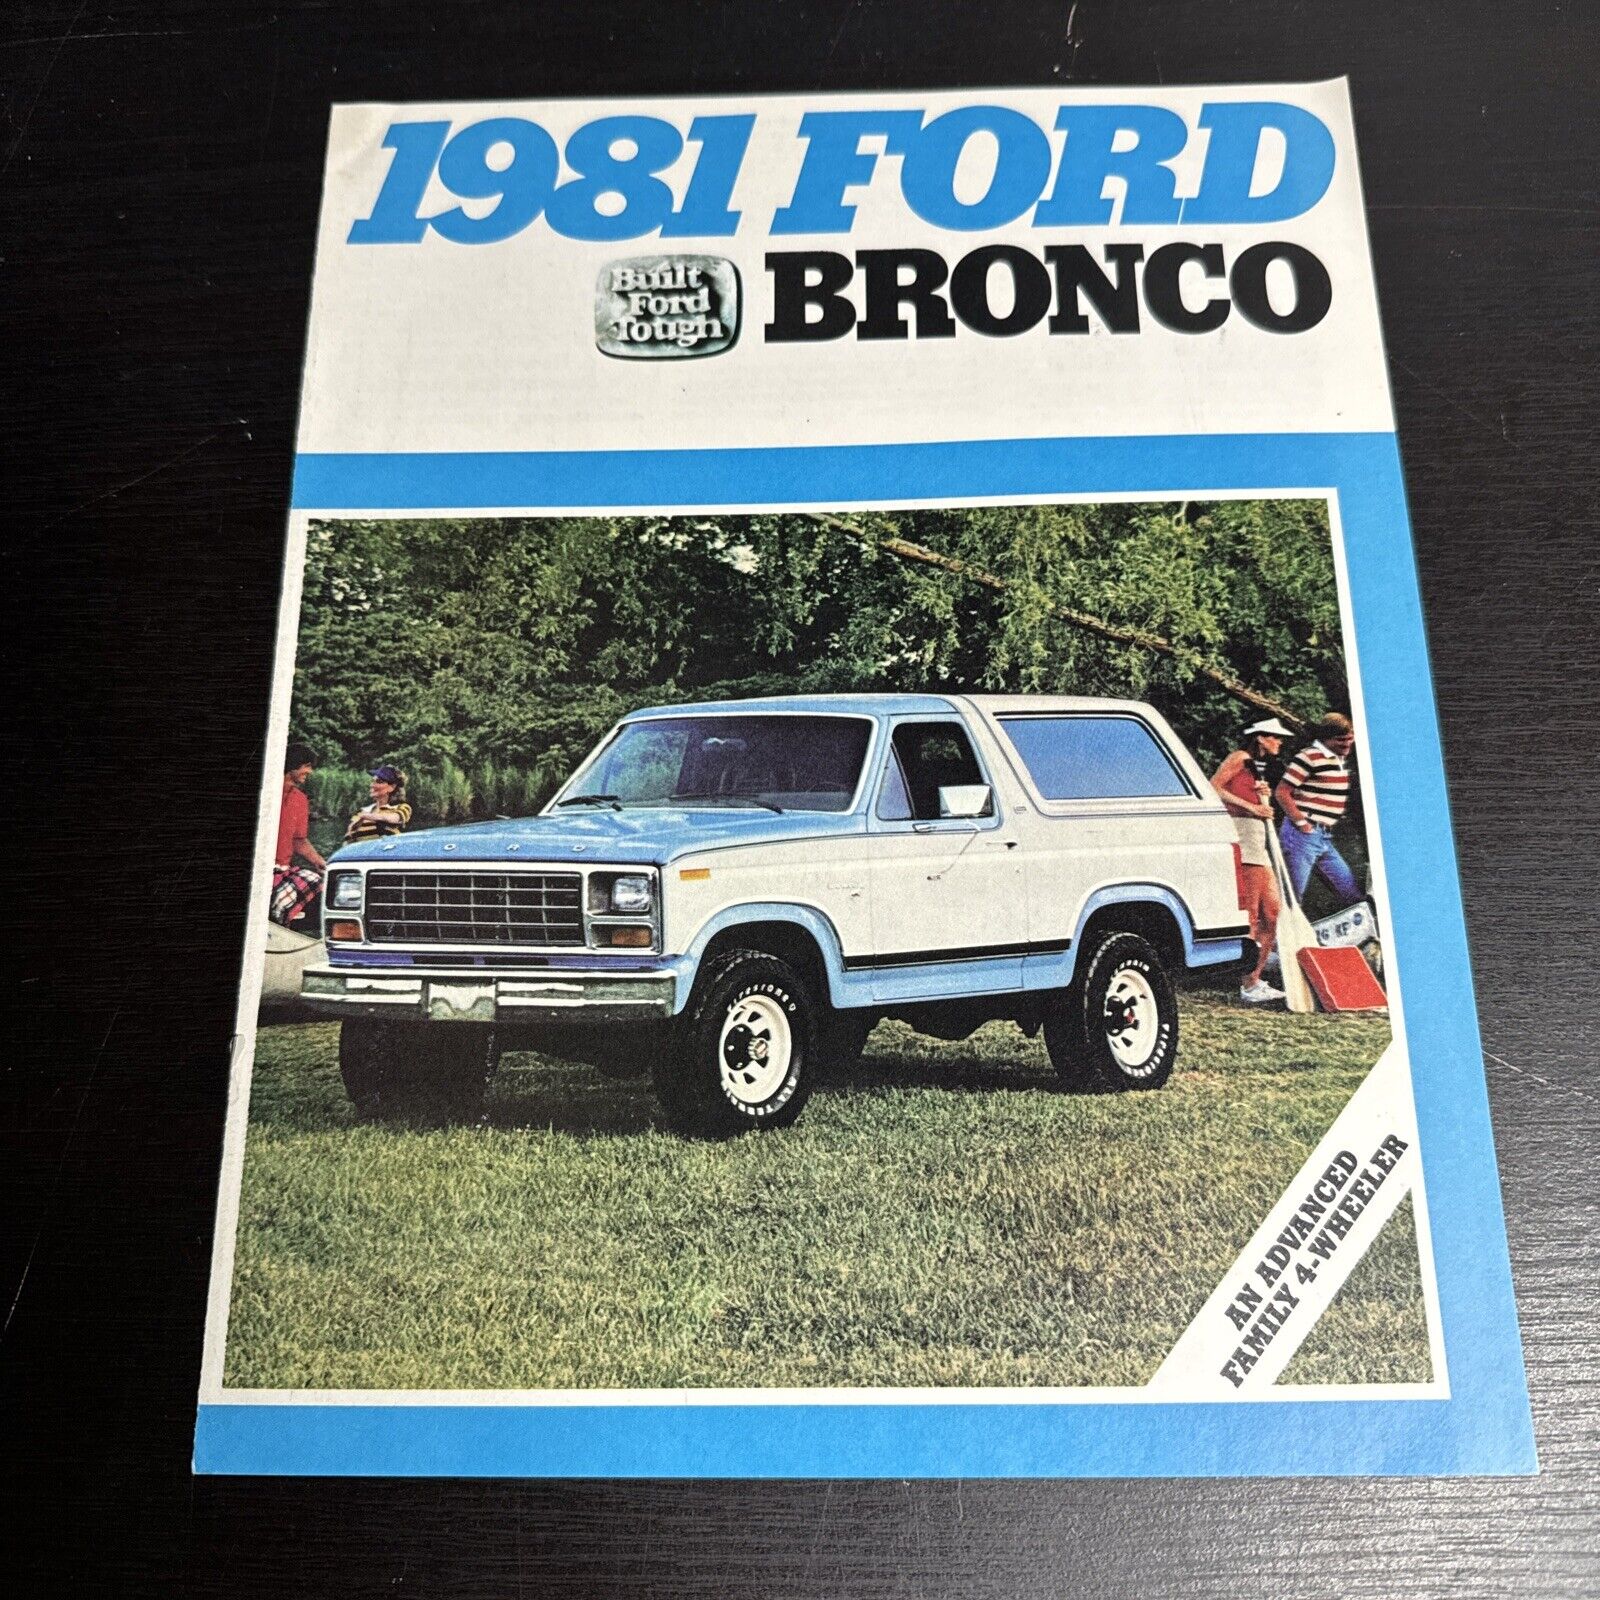 1981 Ford Bronco Vintage Car Truck Original Sales Brochure Excellent Condition